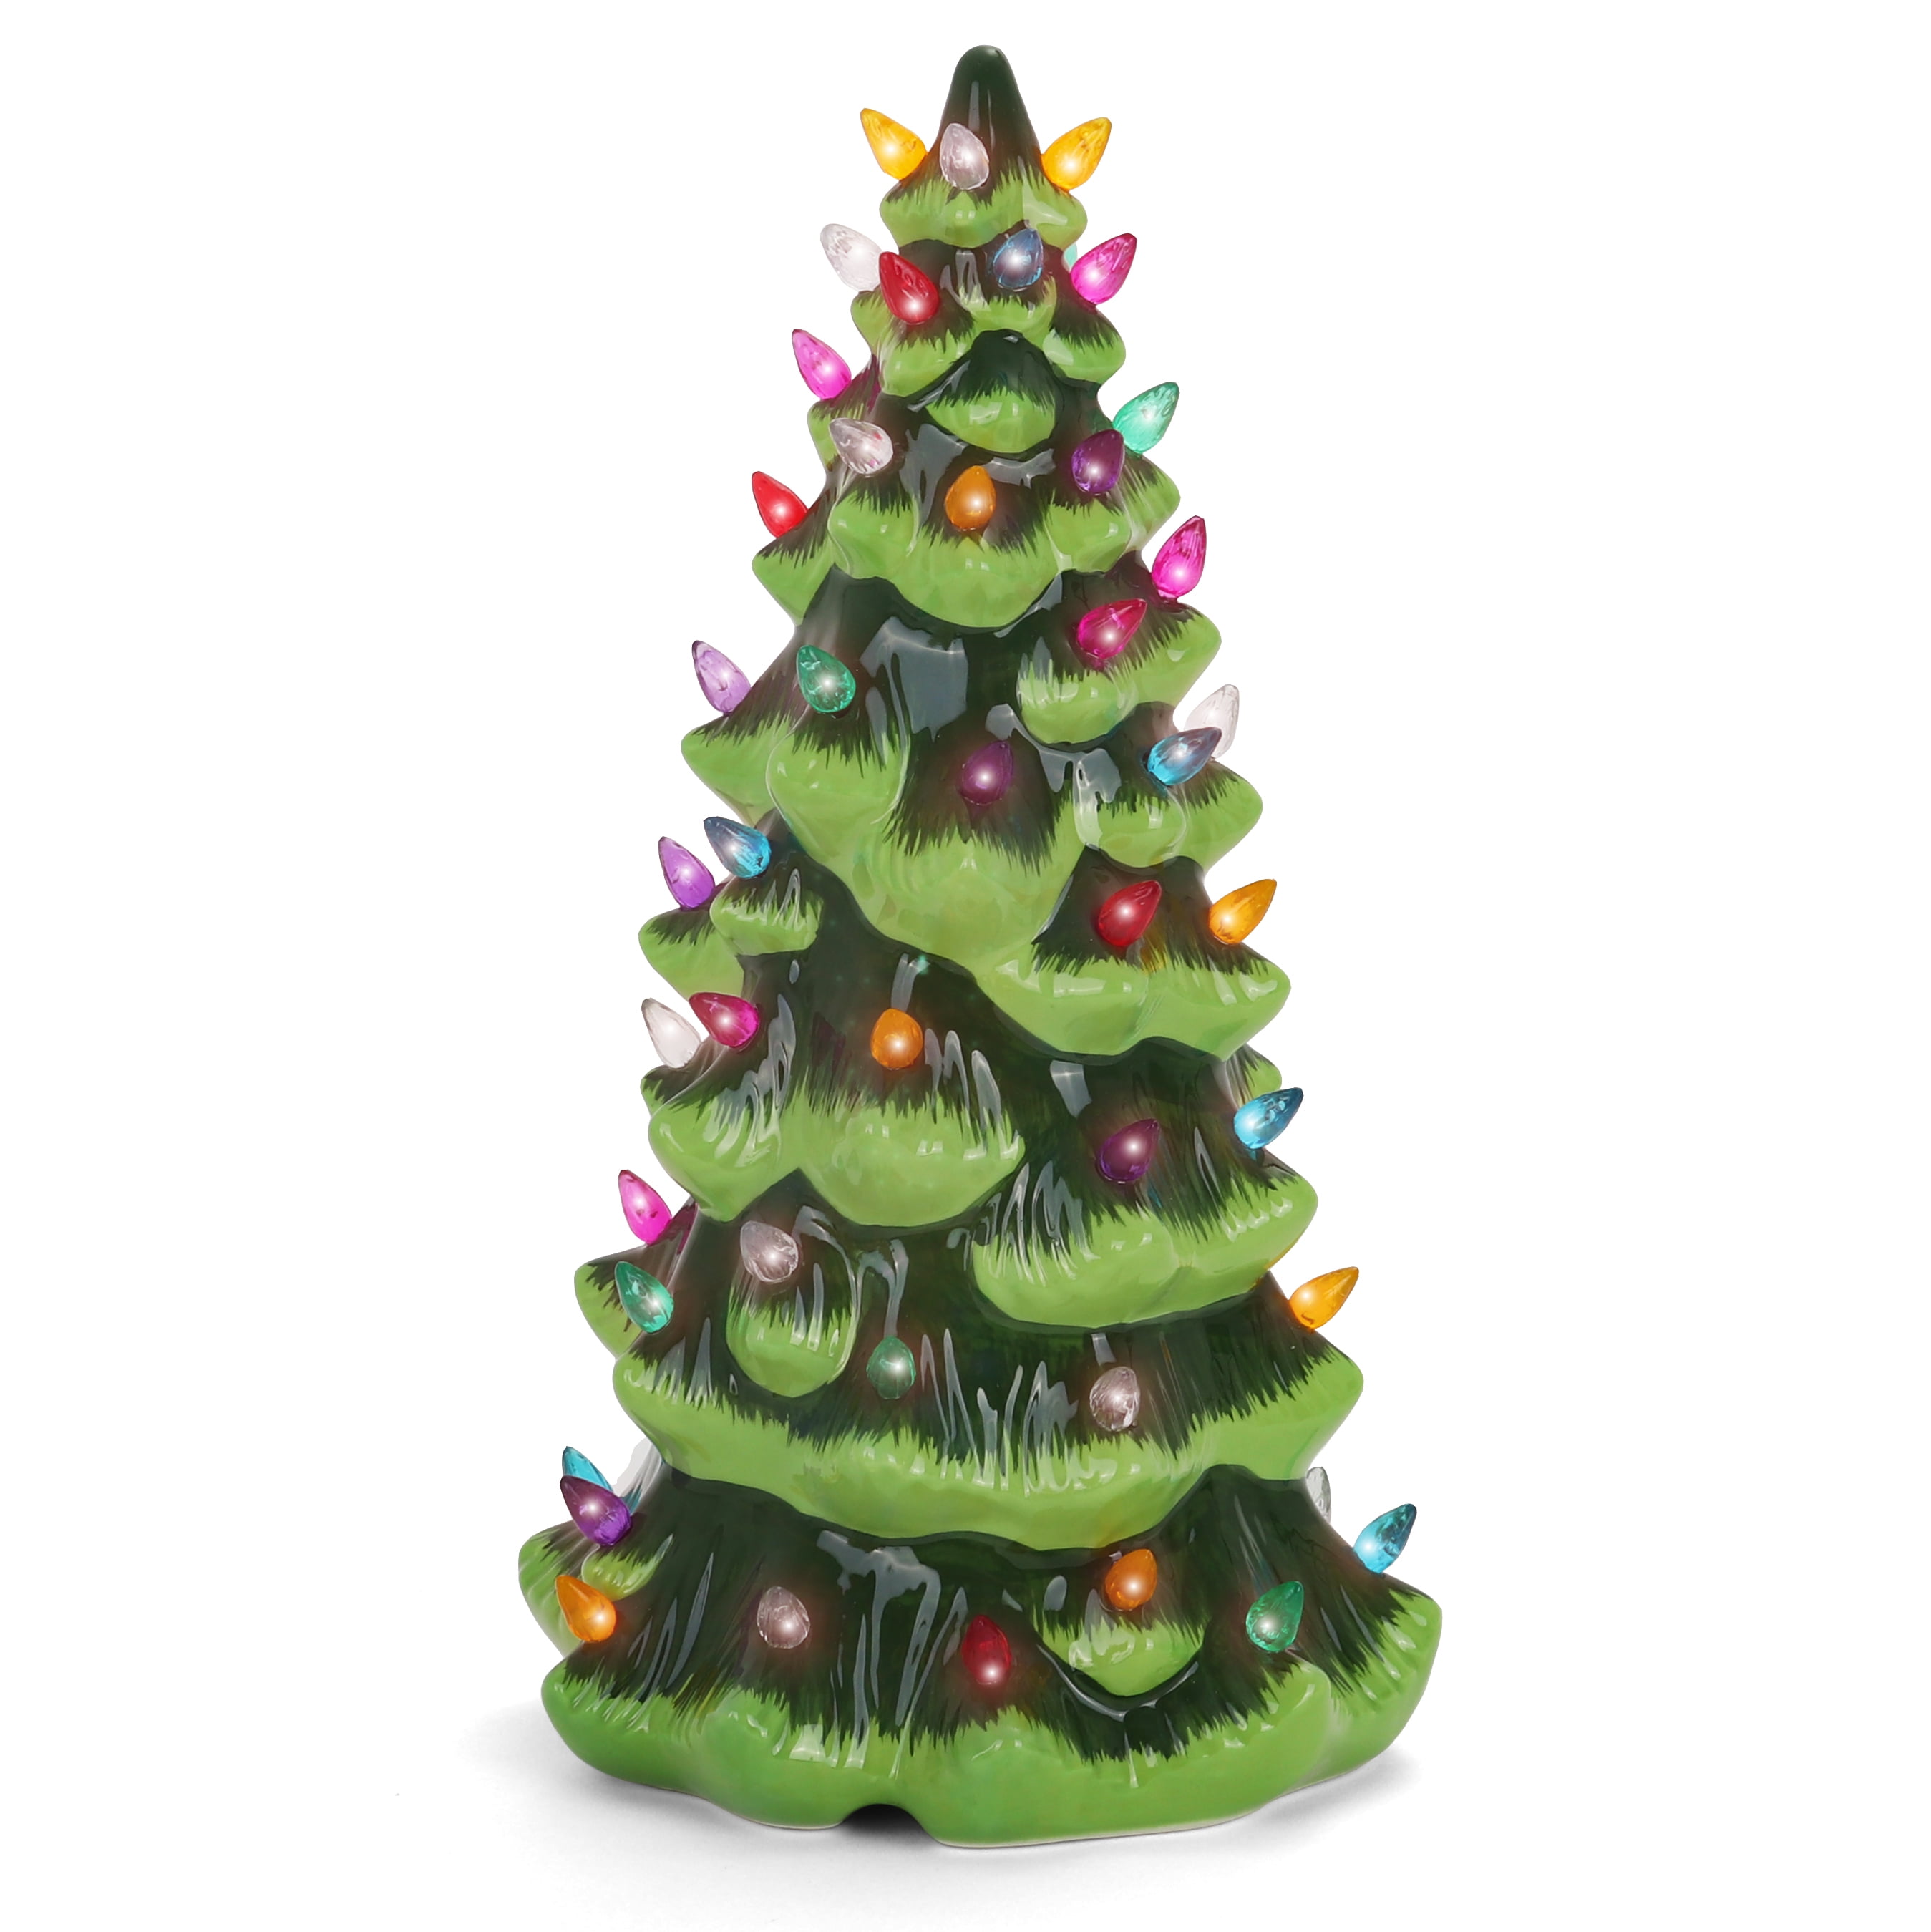 Ceramic Christmas Tree 15.5 Large Green Christmas Tree/Multicolored Lights - Lighted Vintage Ceramic Tree Tabletop Christmas Tree with Lights -